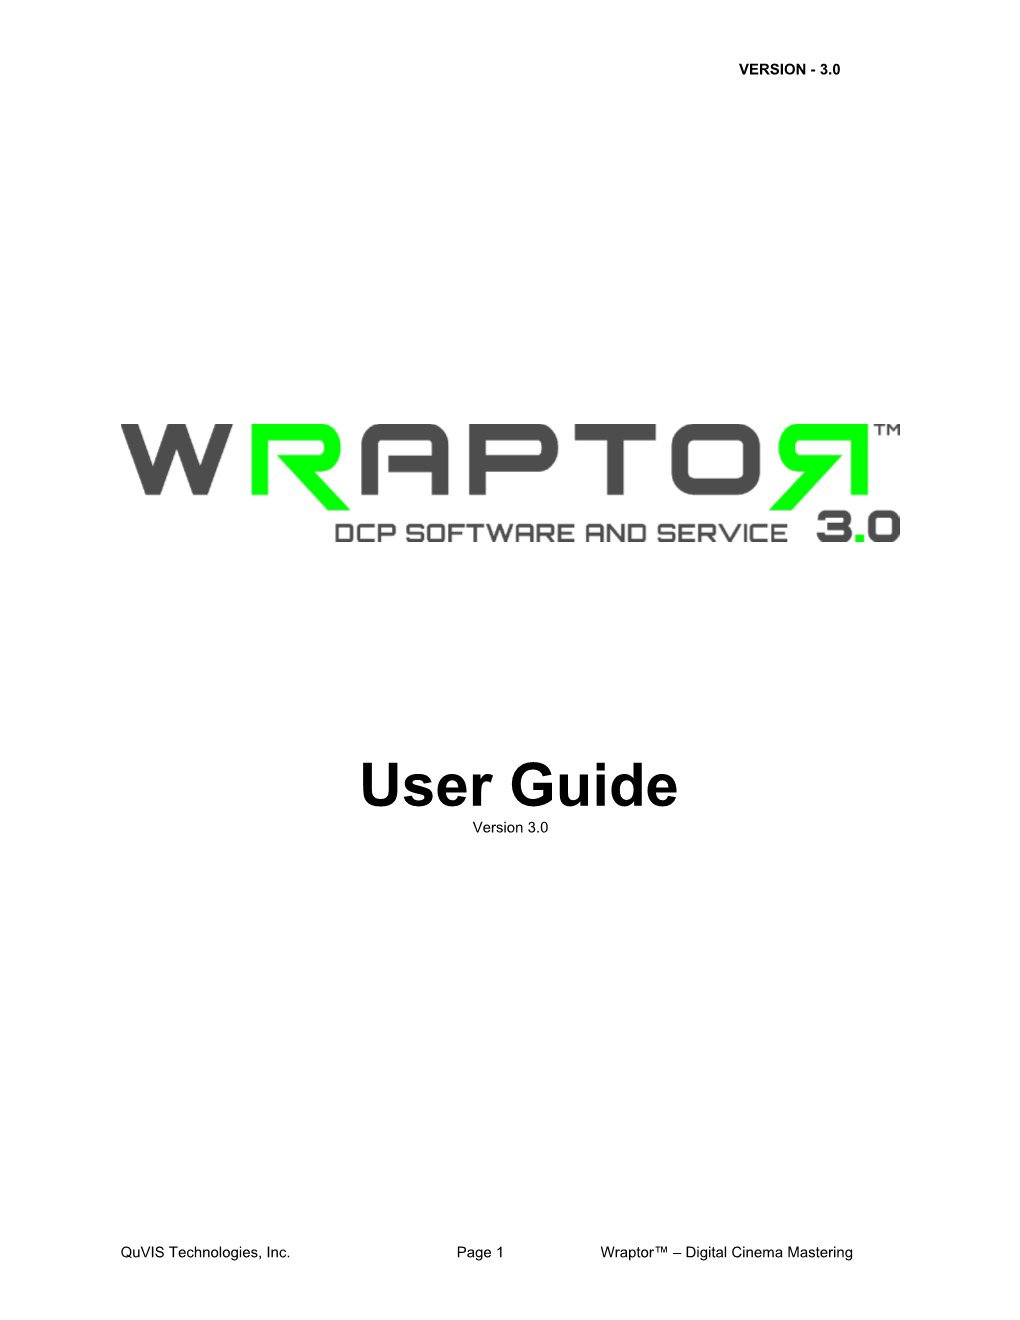 User Guide Version 3.0